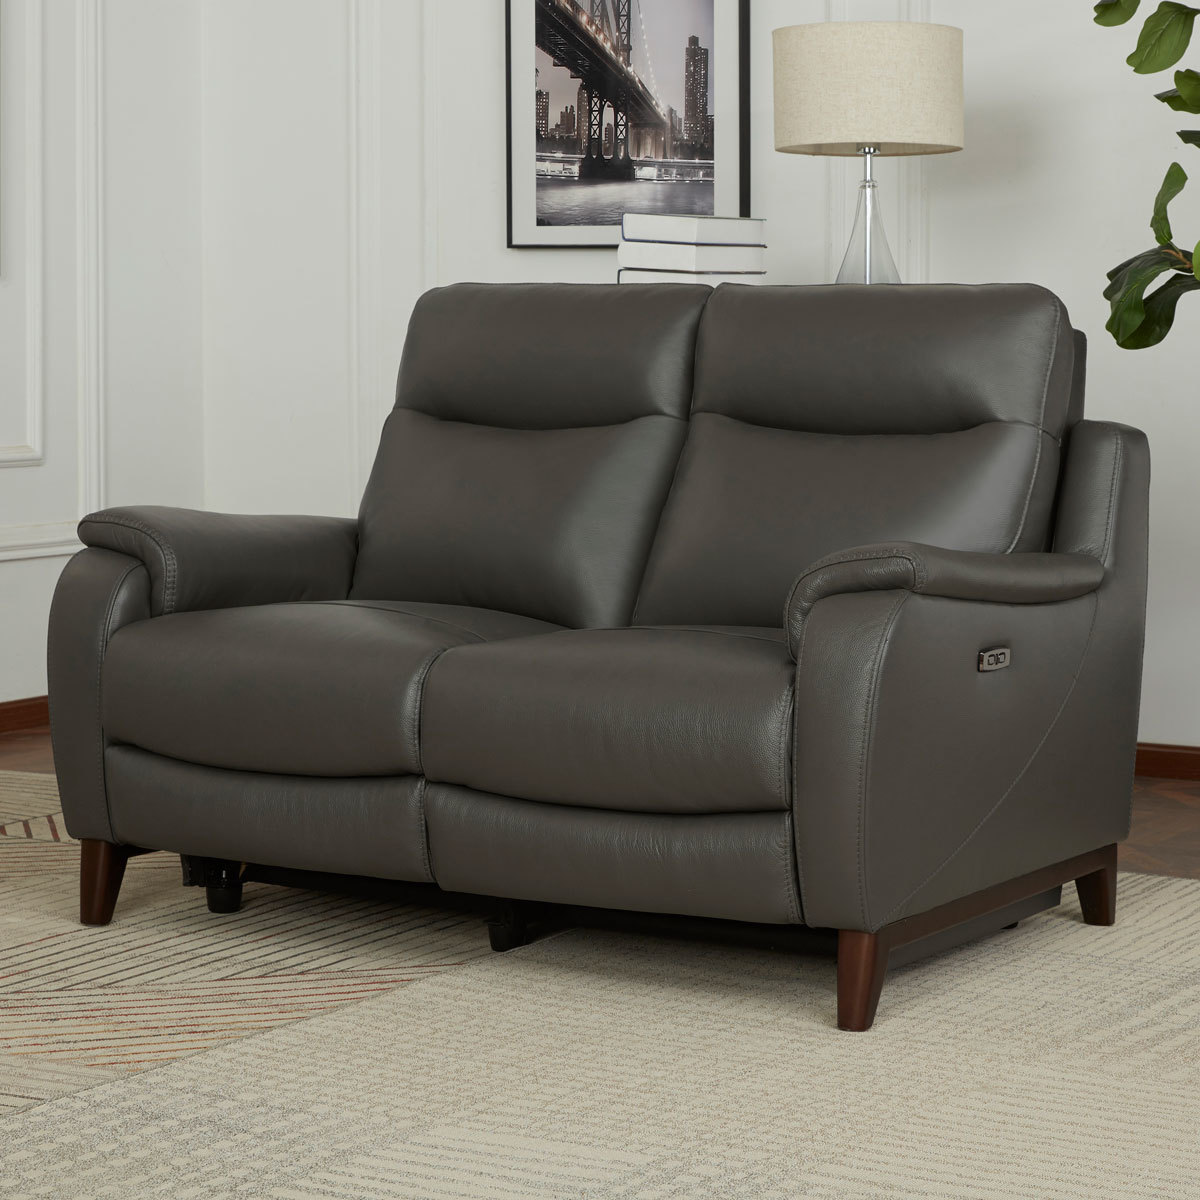 Gilman Creek Barrett 2 Seater Grey, Small Scale Leather Reclining Sofa